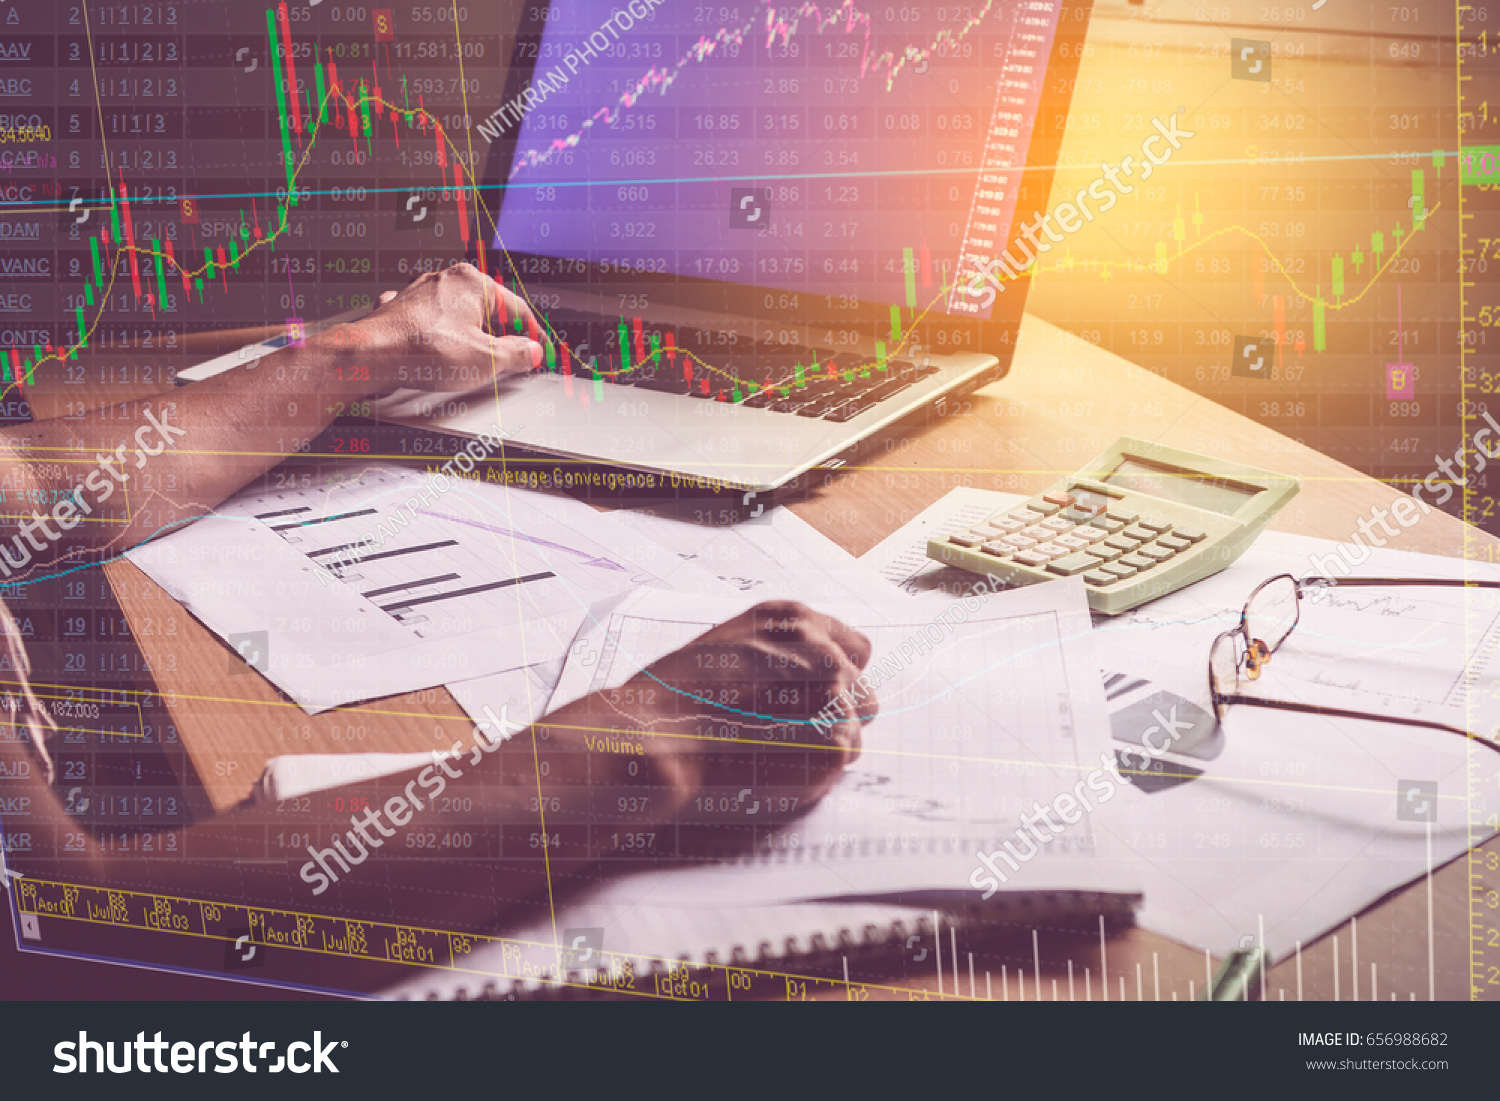 How To Analyze Stock Charts